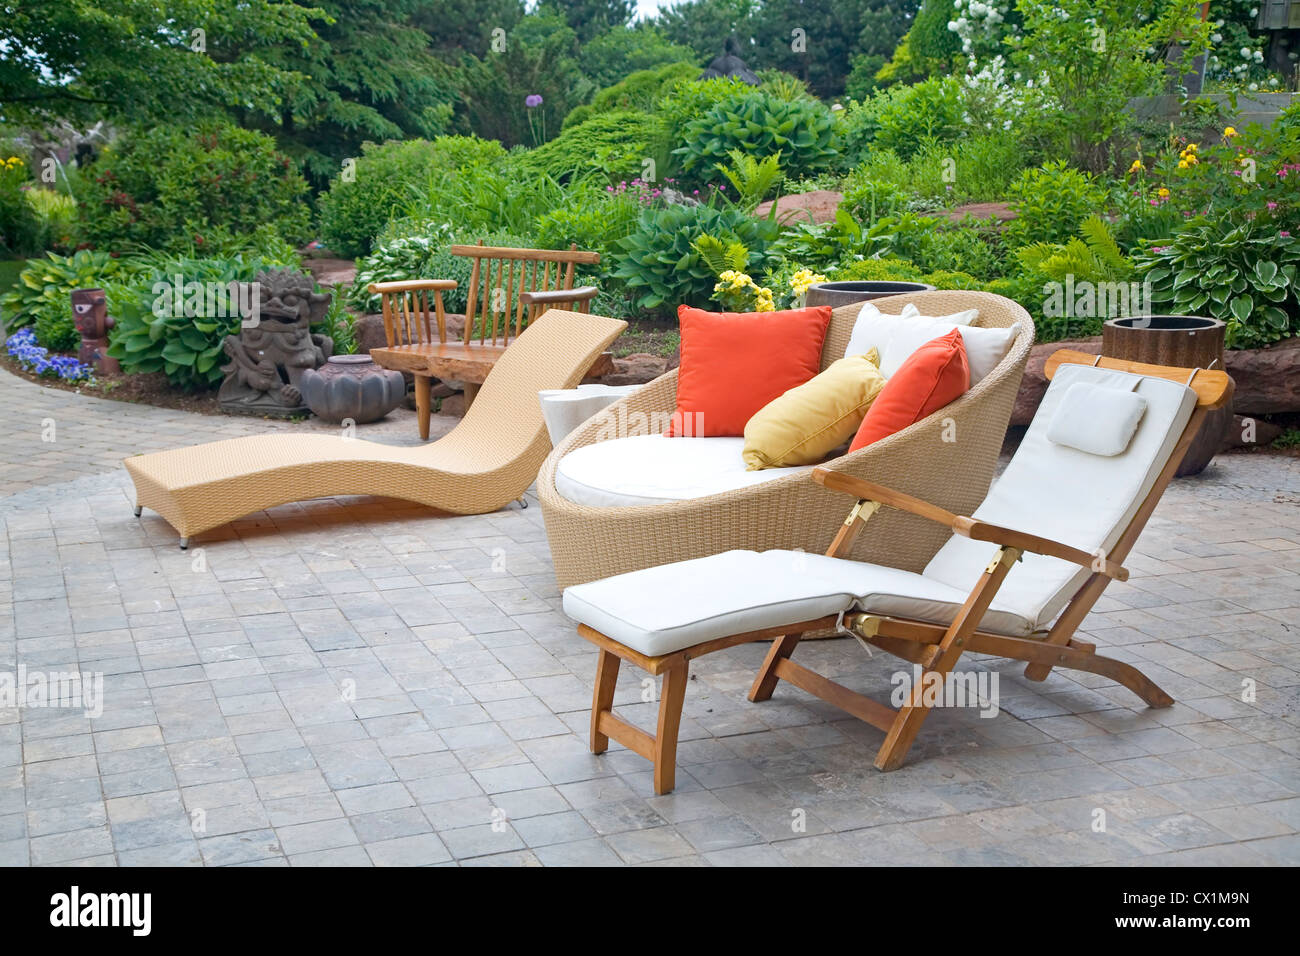 An array of modern wicker garden furniture on a patio in the home garden. Stock Photo